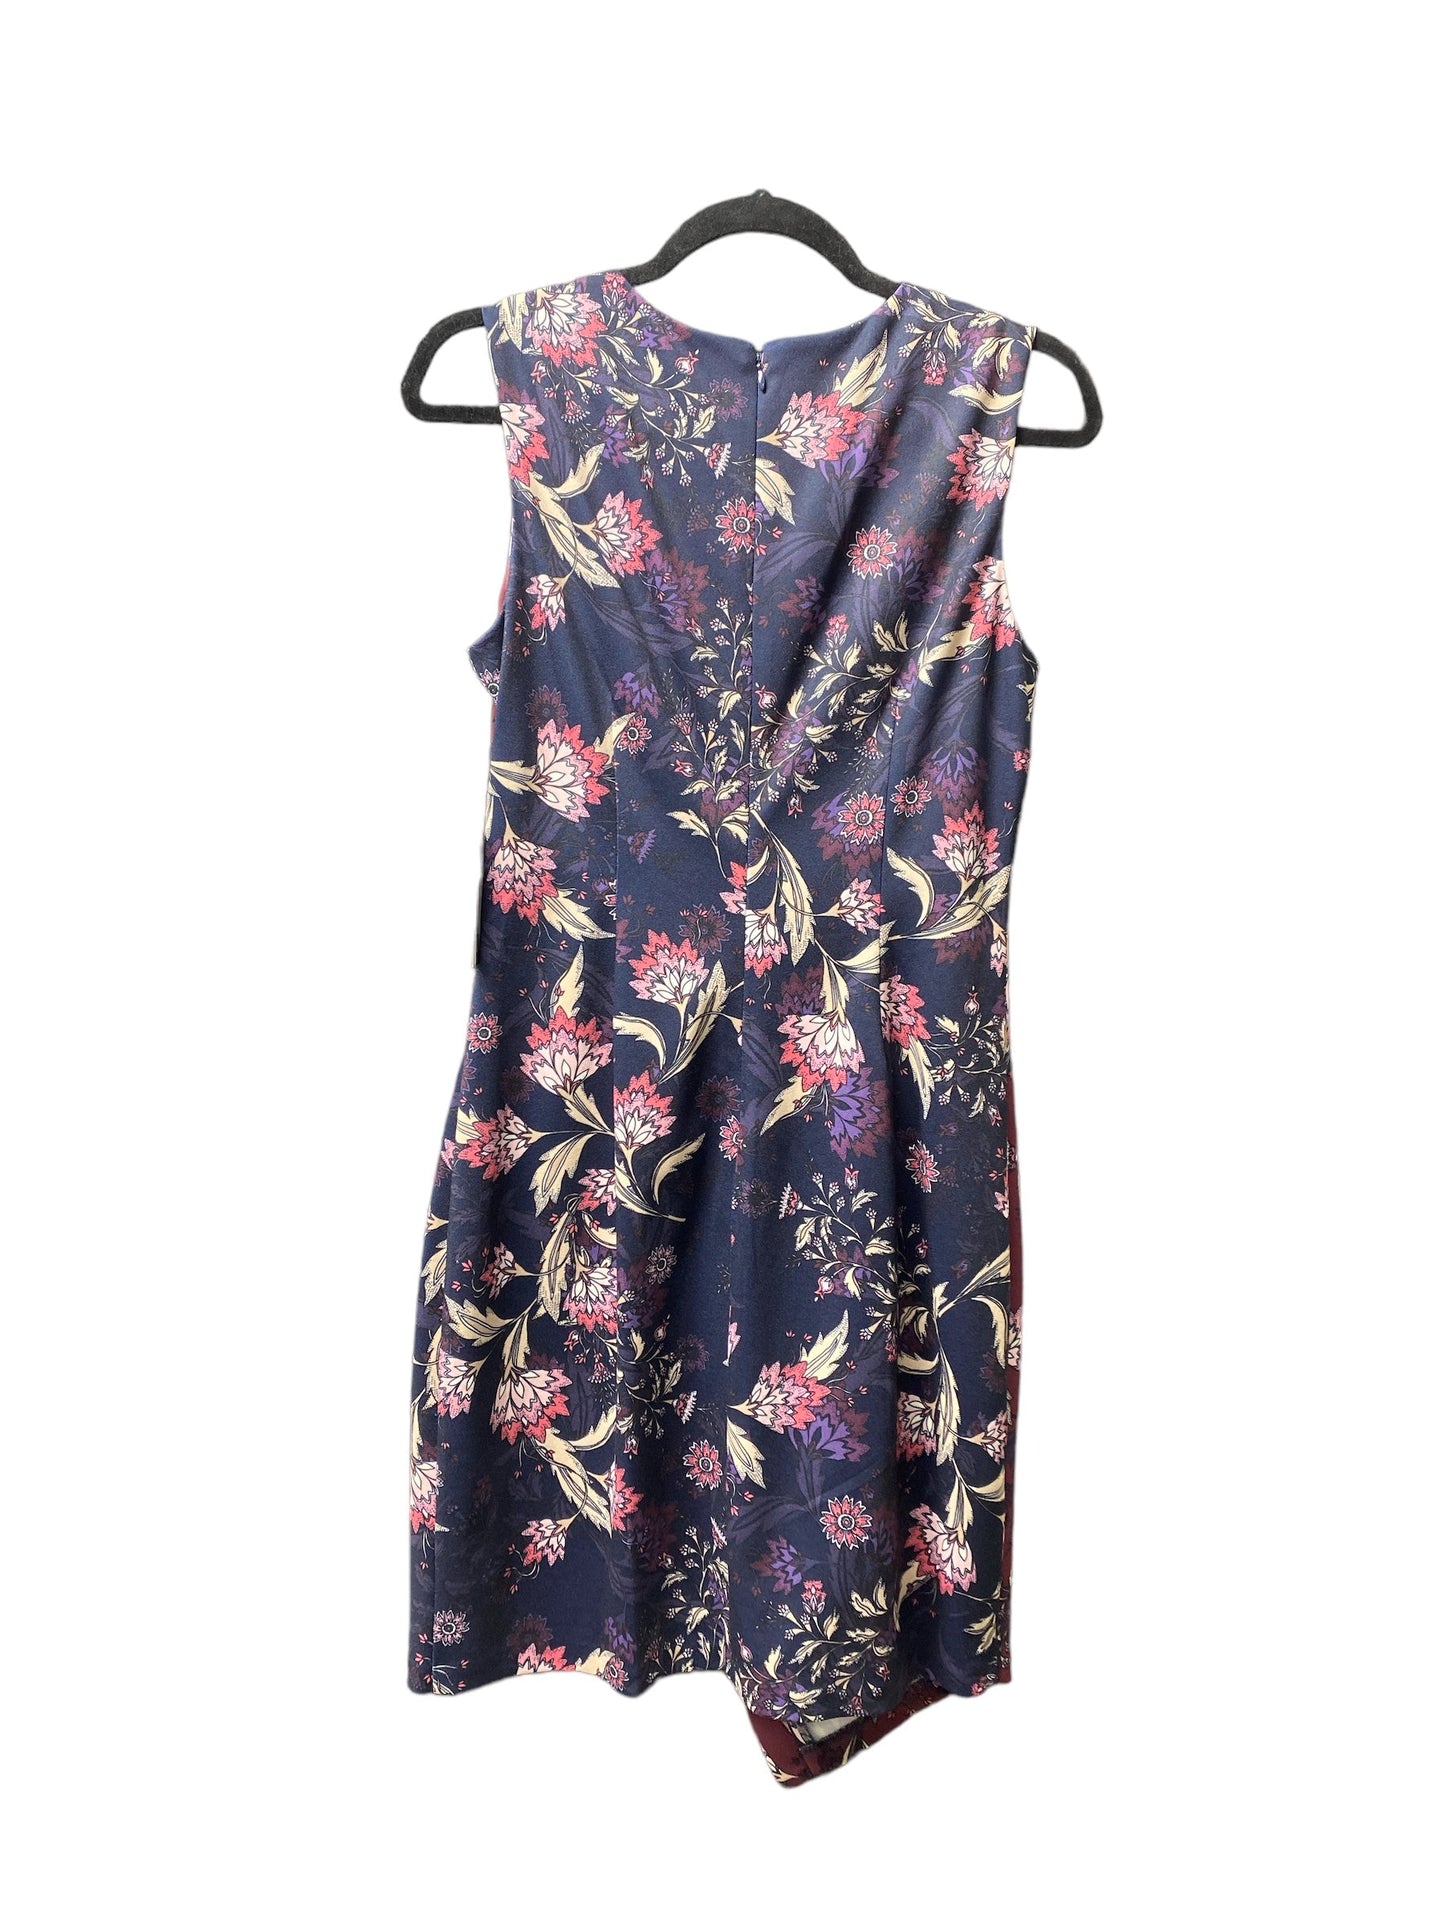 Floral Print Dress Casual Short Vince Camuto, Size 6